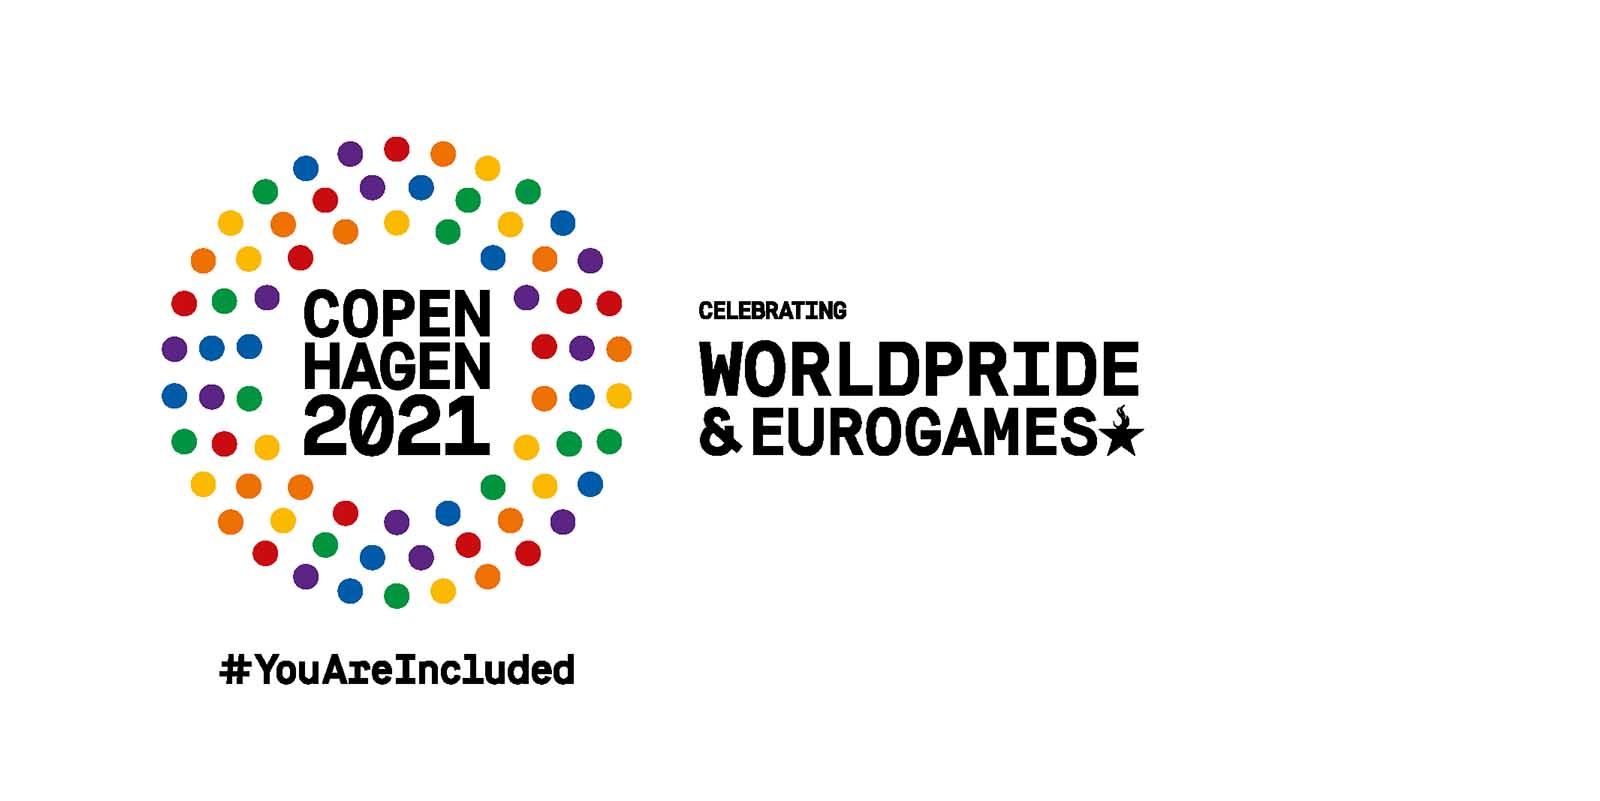 Worldpride and Eurogames - Copenhagen 2021